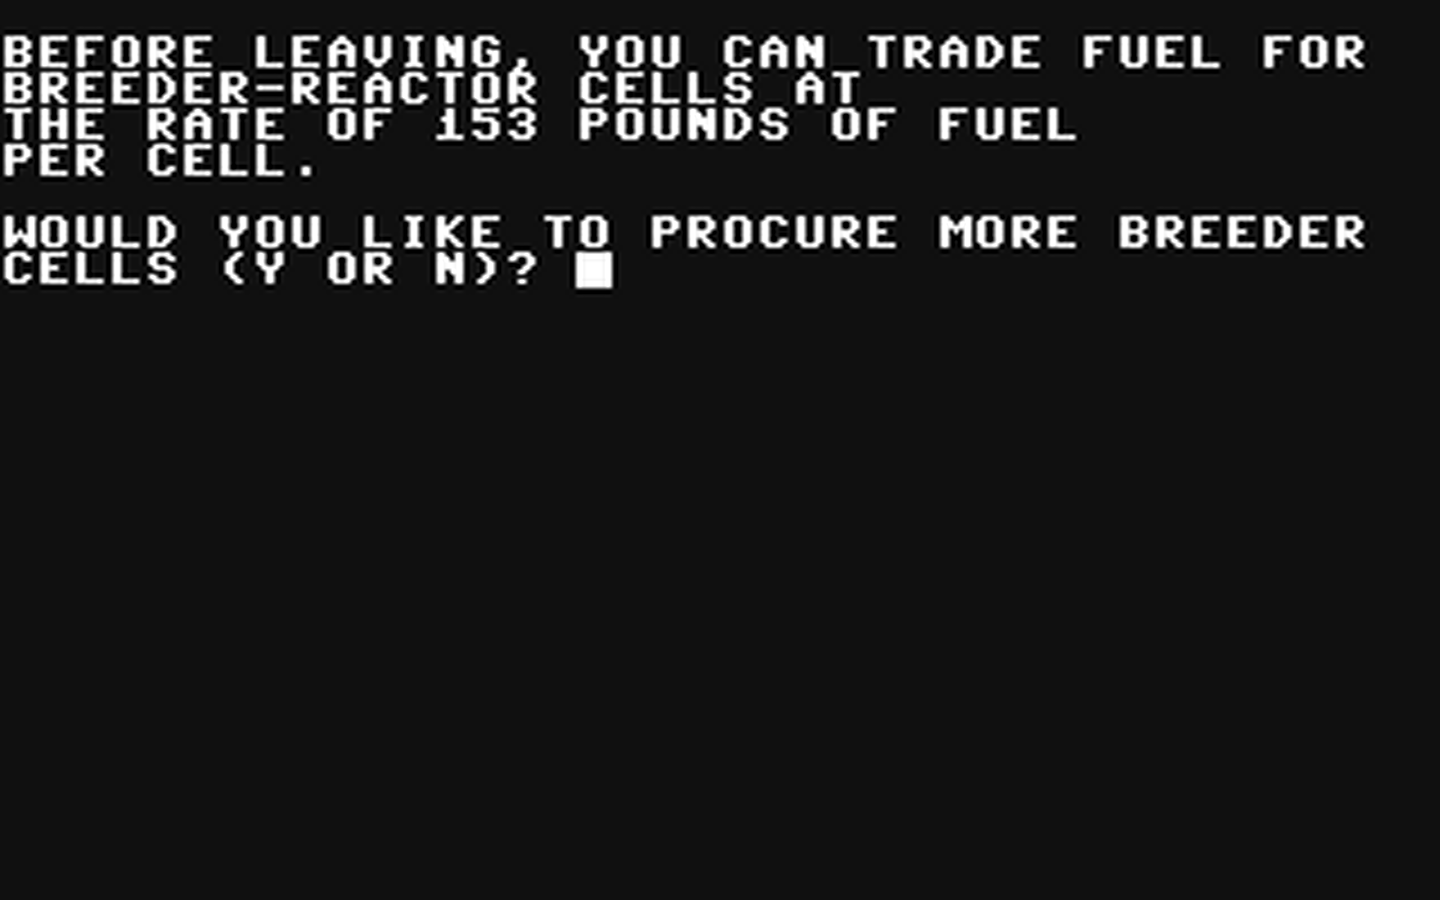 C64 GameBase Voyage_to_Neptune Microsoft_Press 1986